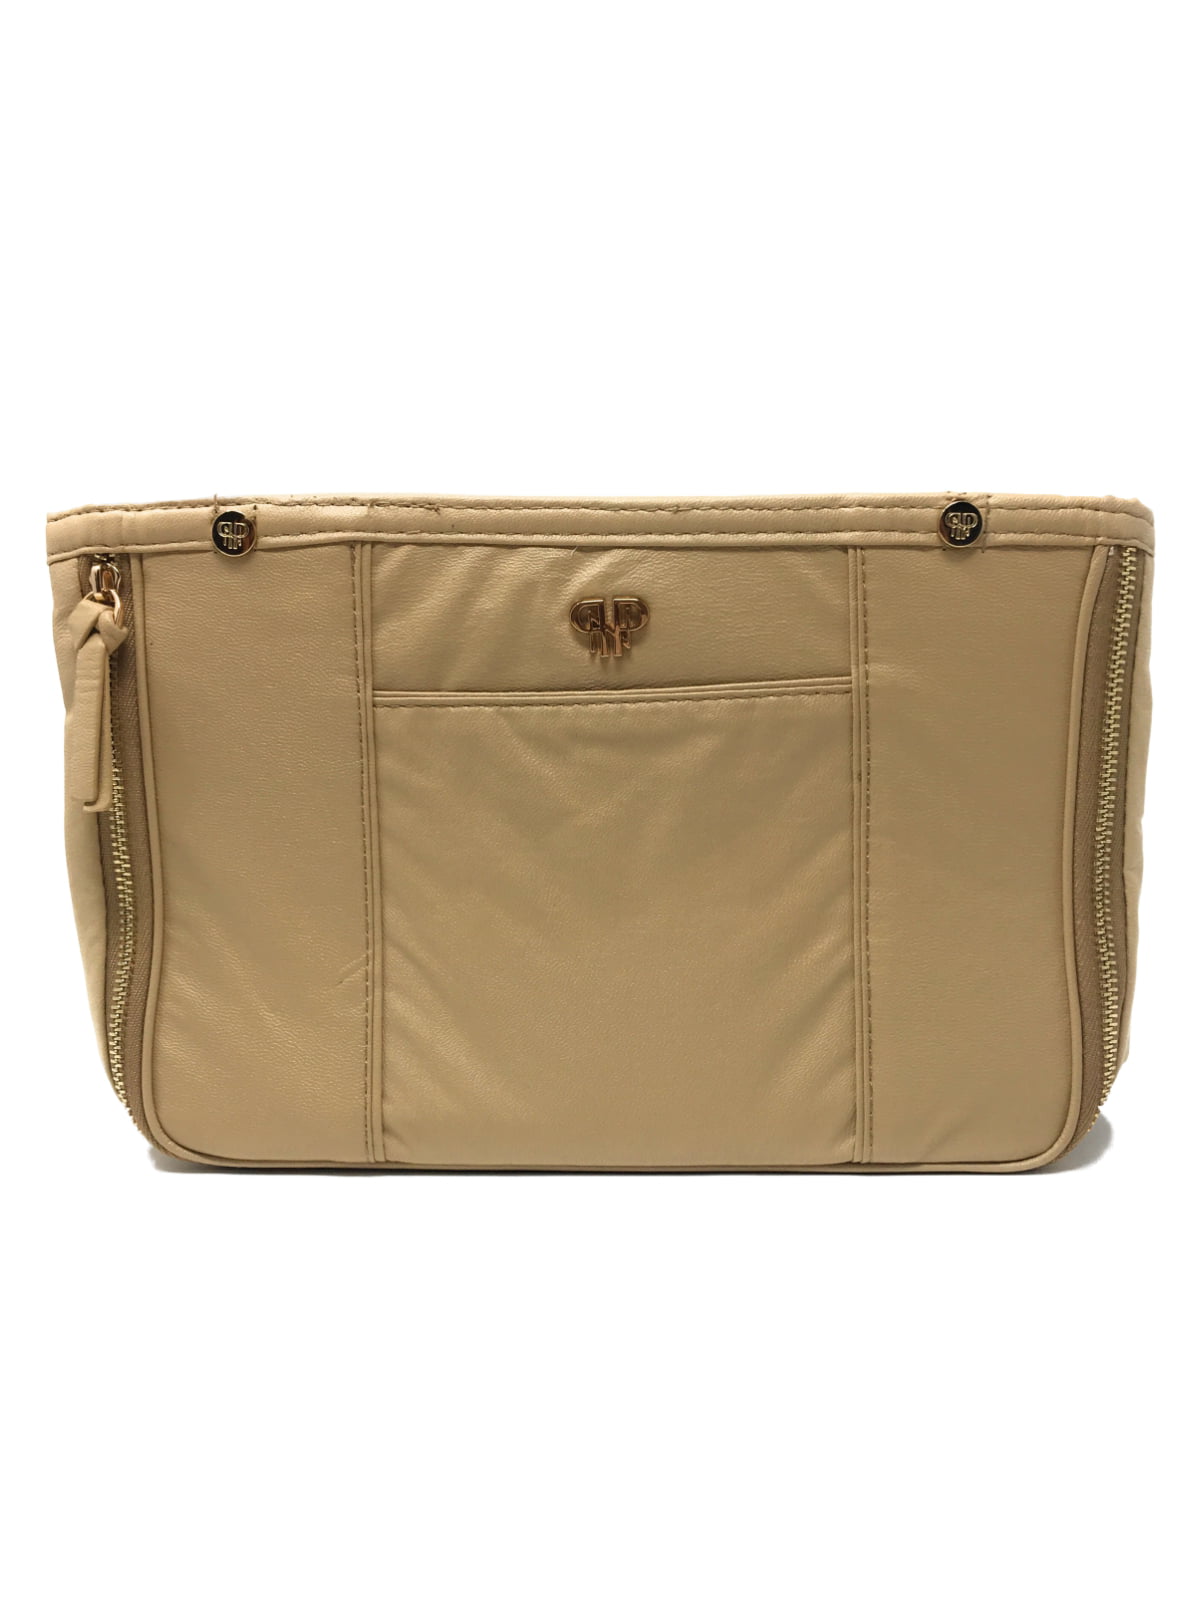 PurseN Purse Organizer - LV Speedy 30 Base Shaper Handbag Insert (Small, Nude) - www.bagsaleusa.com/product-category/twist-bag/ ...